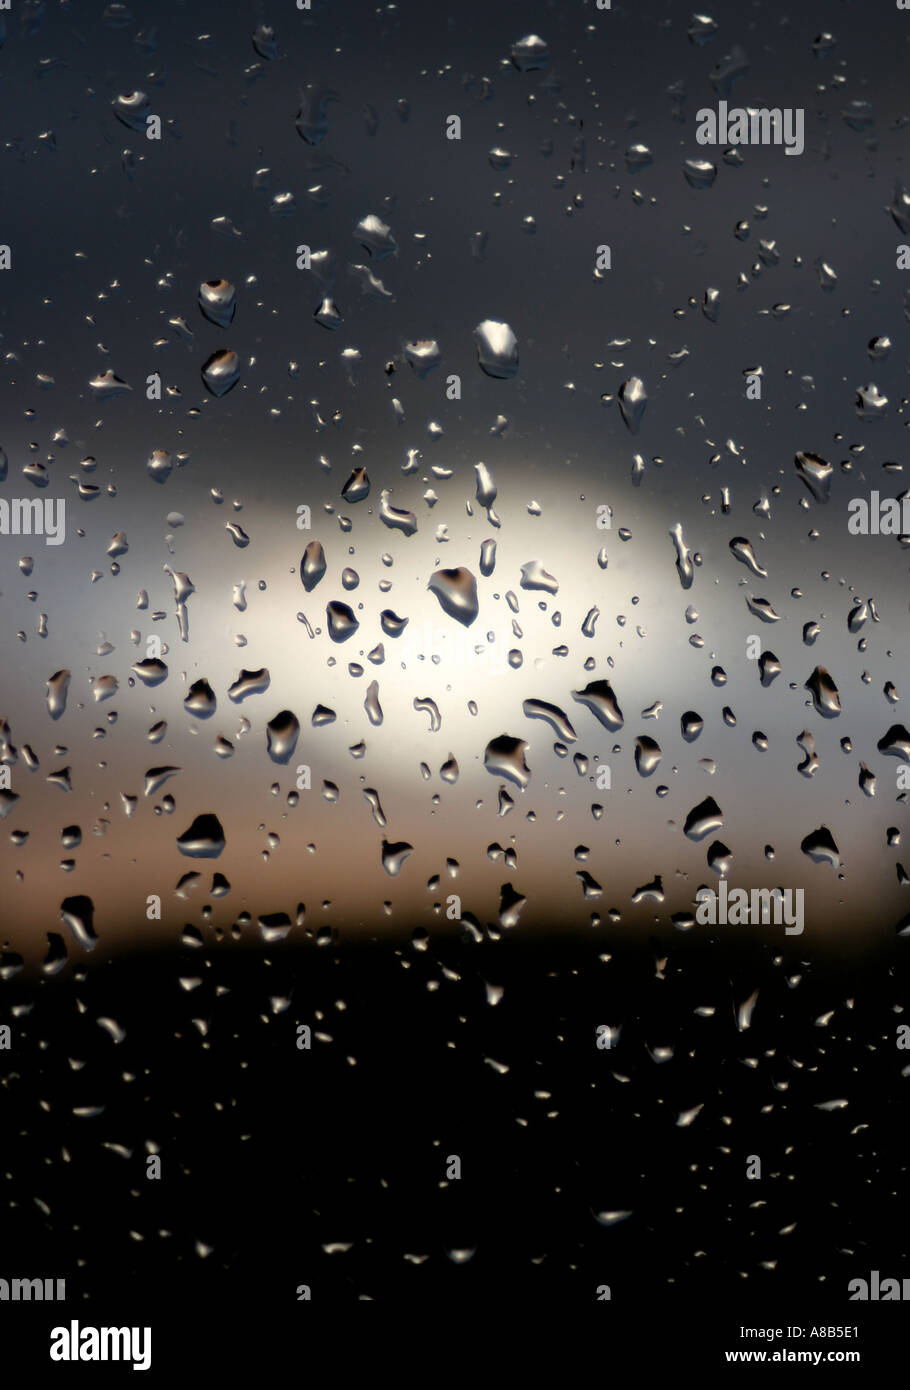 RAIN DROPS ON WINDOW PANE AS SUN SETS Stock Photo